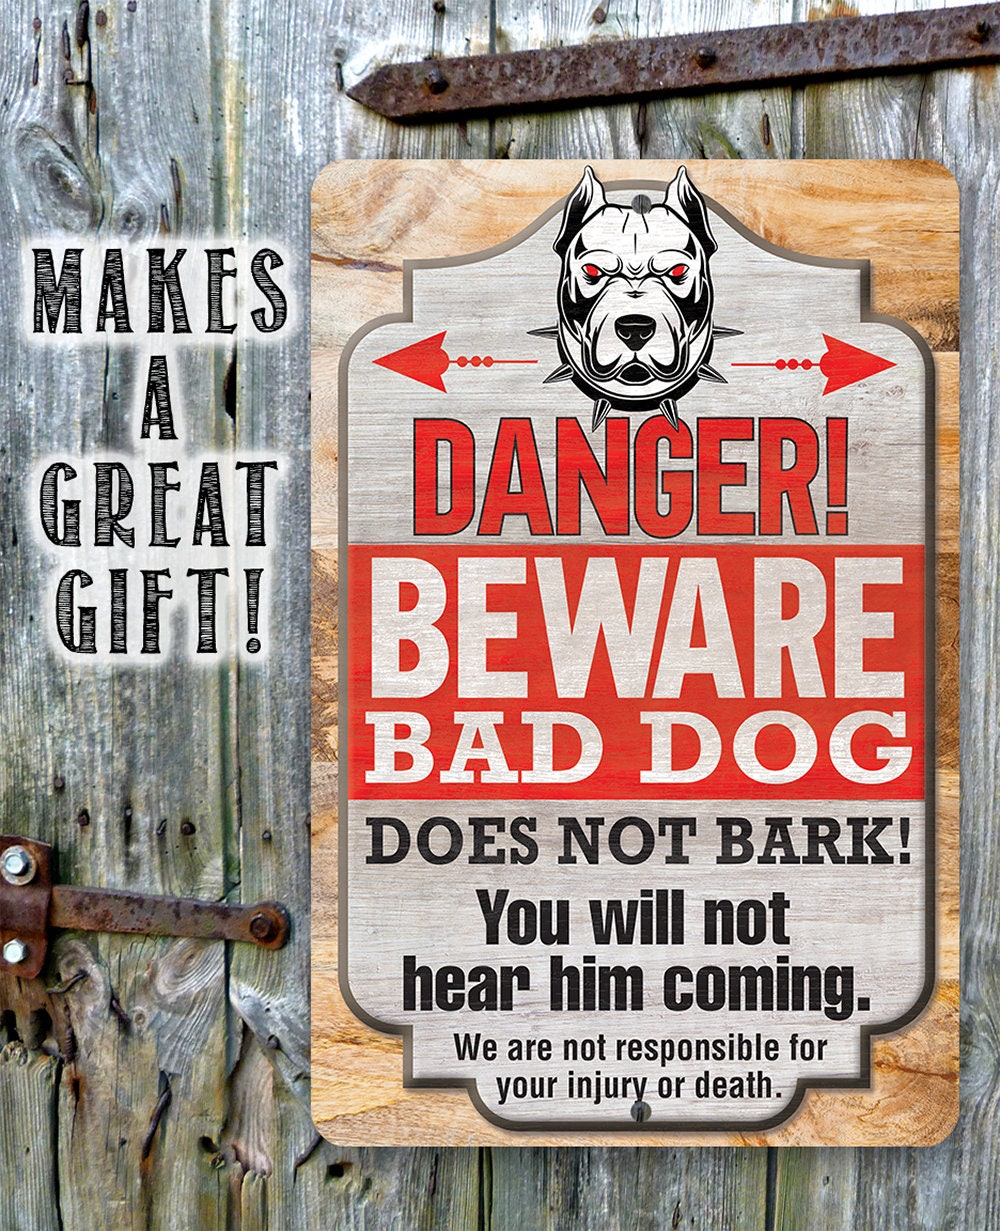 Danger! Beware Bad Dog, Does Not Bark - Metal Sign Metal Sign Lone Star Art 